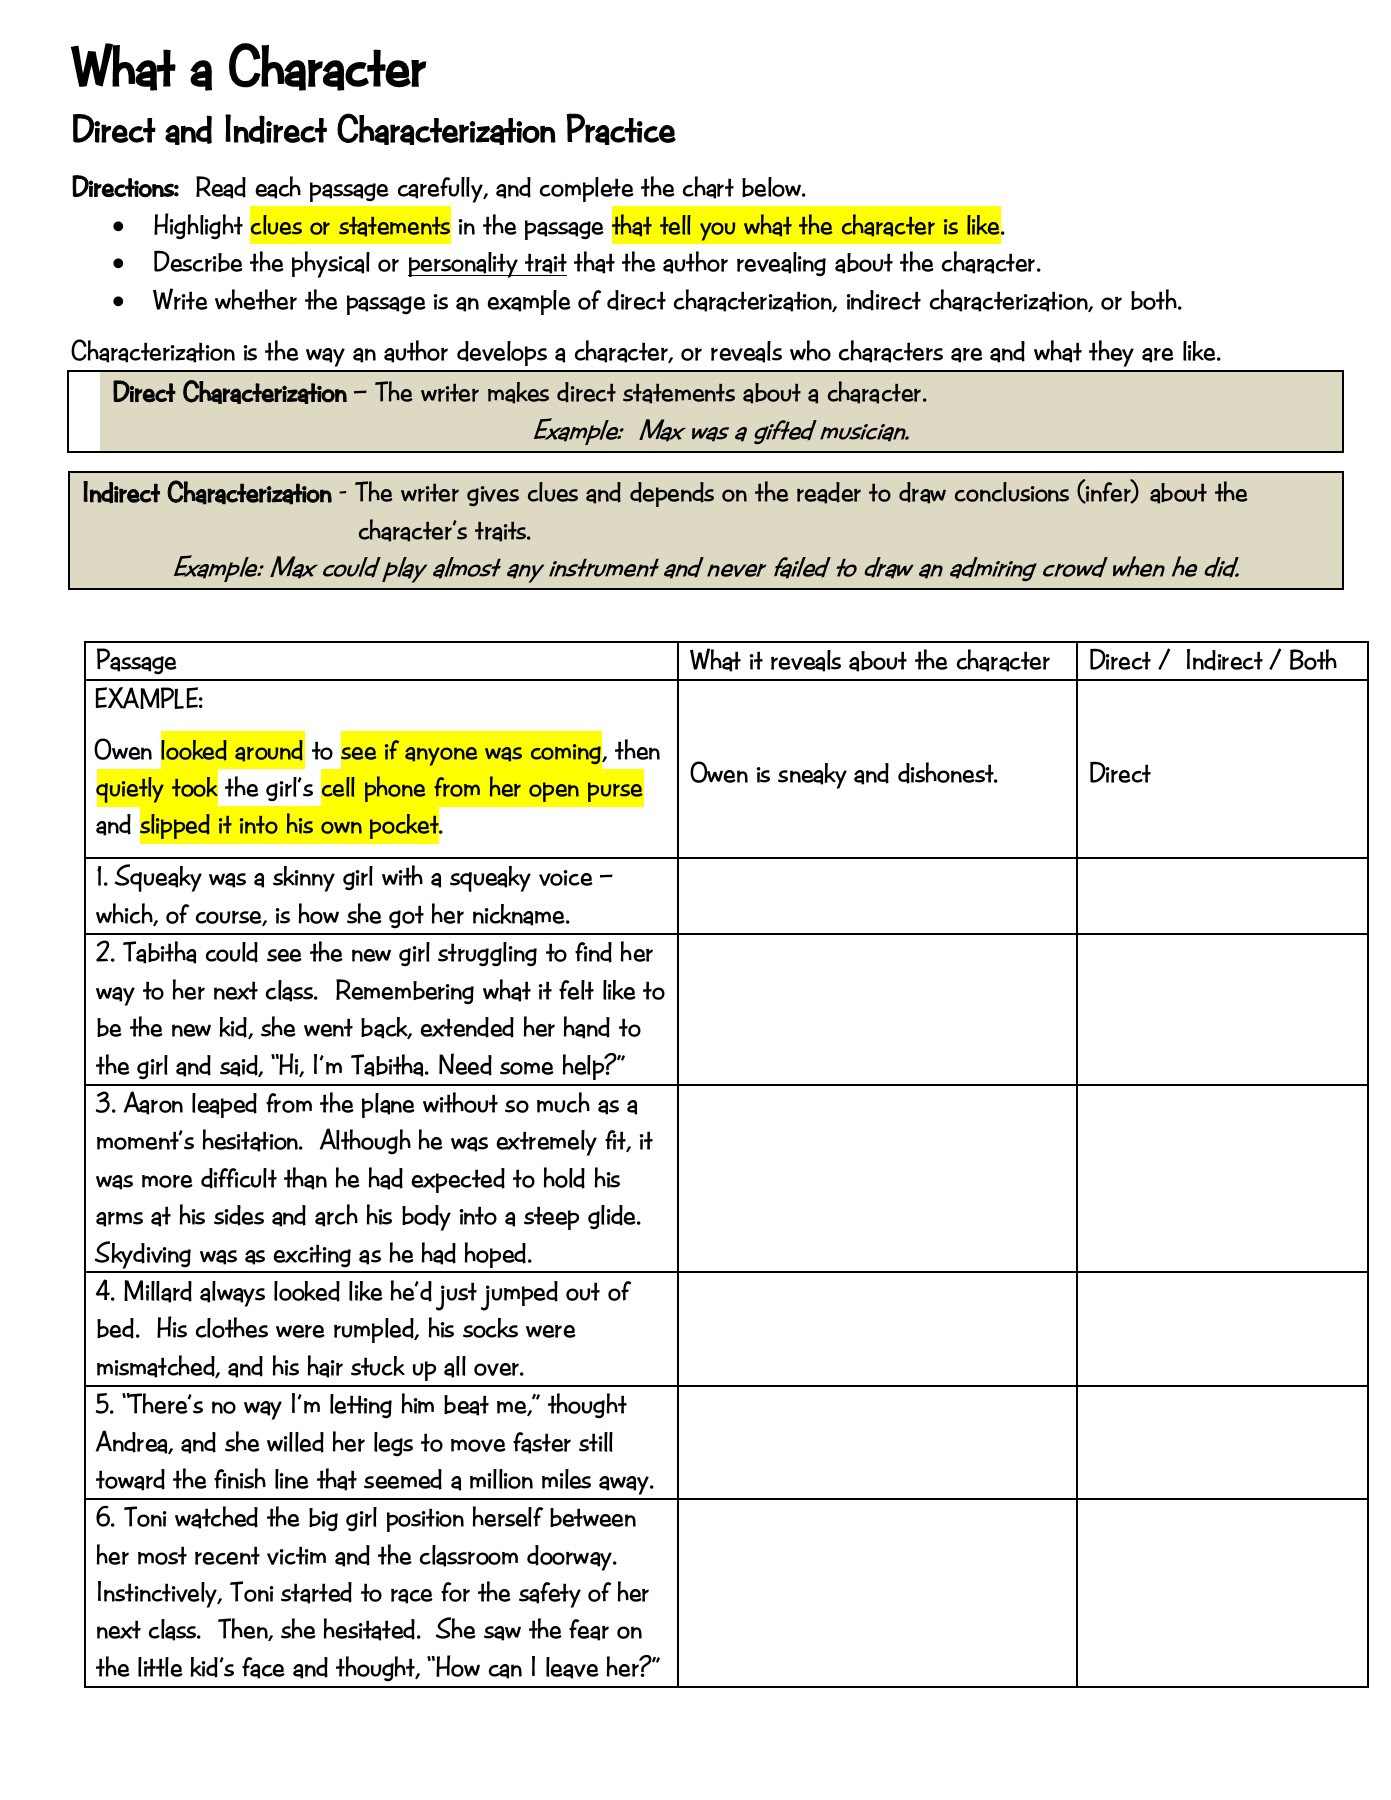 indirect-and-direct-characterization-worksheet-slideshare